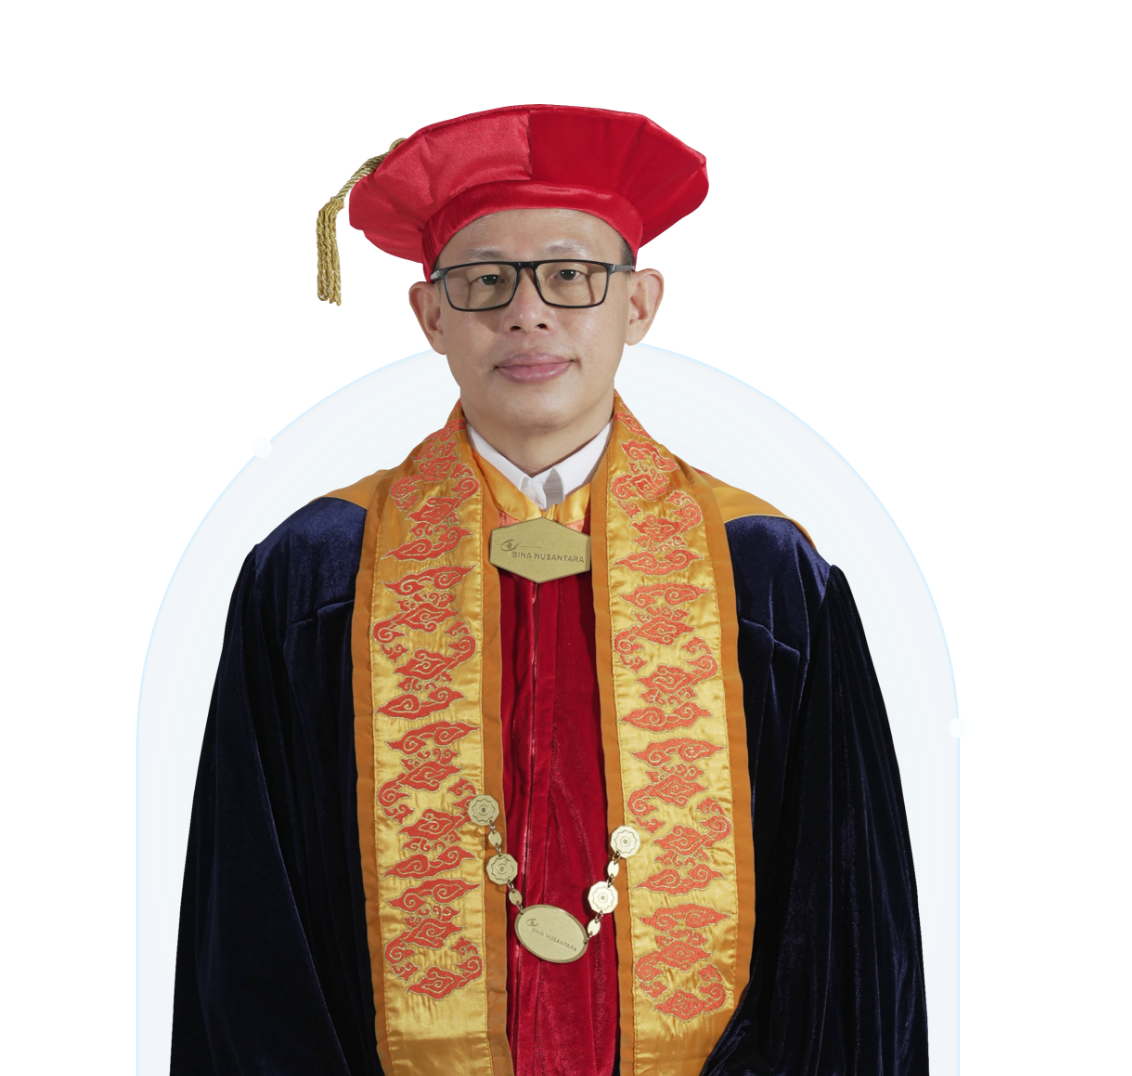 Prof. Fergyanto E. Gunawan, Dr. Eng